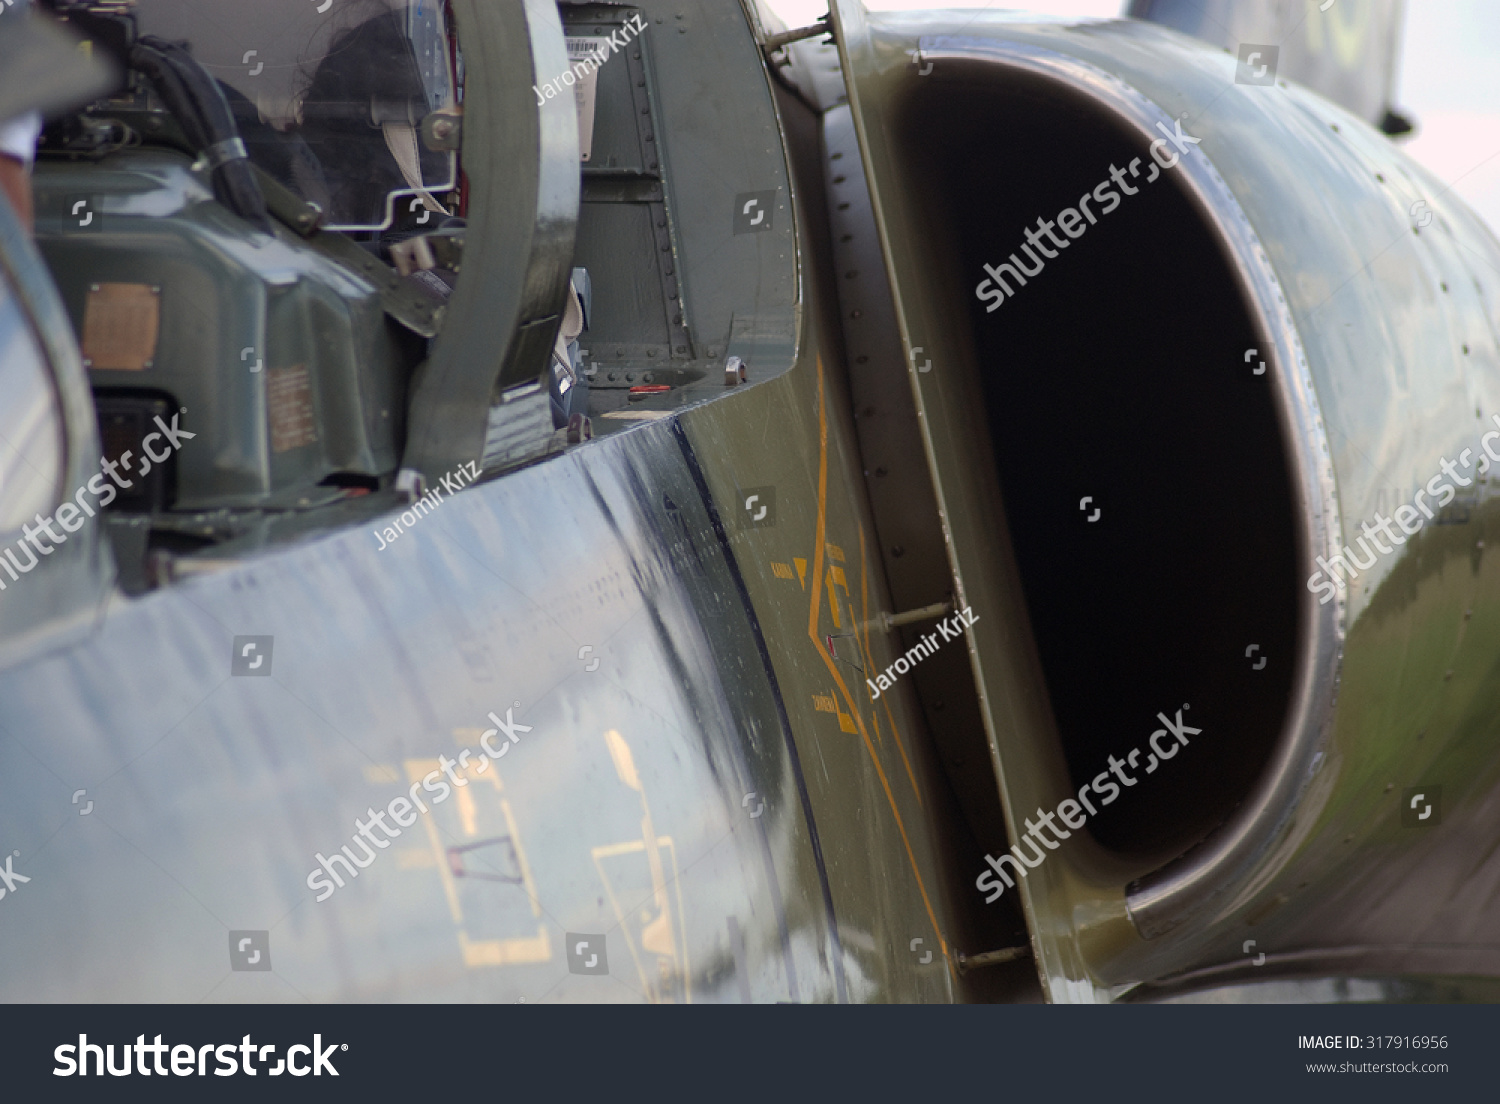 L-39 Albatros jet trainer engine left air intake #317916956